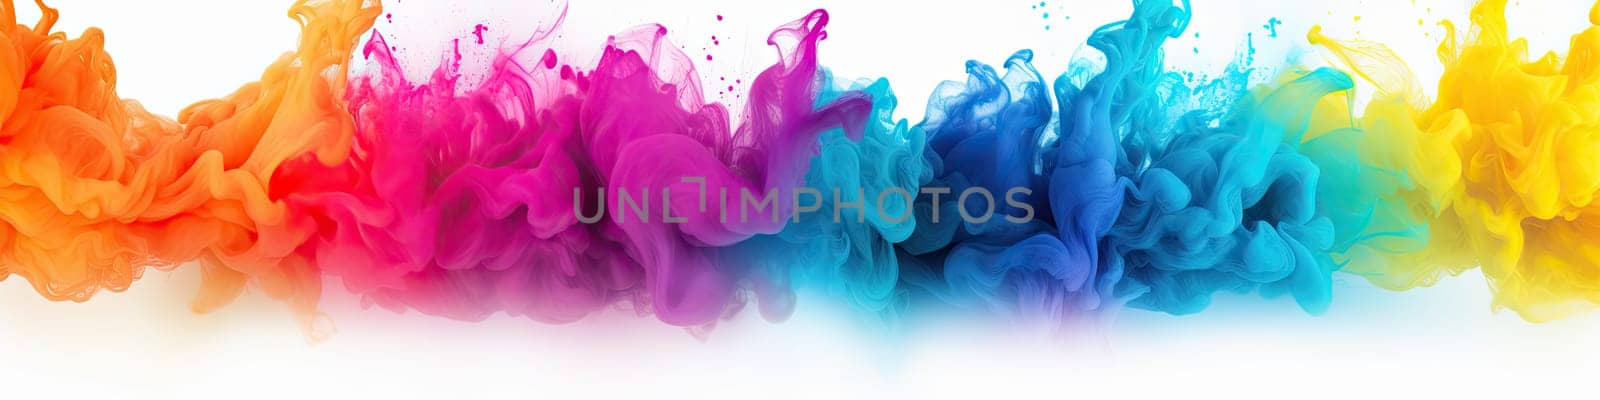 Colorful rainbow holi paint color powder explosion isolated on white background